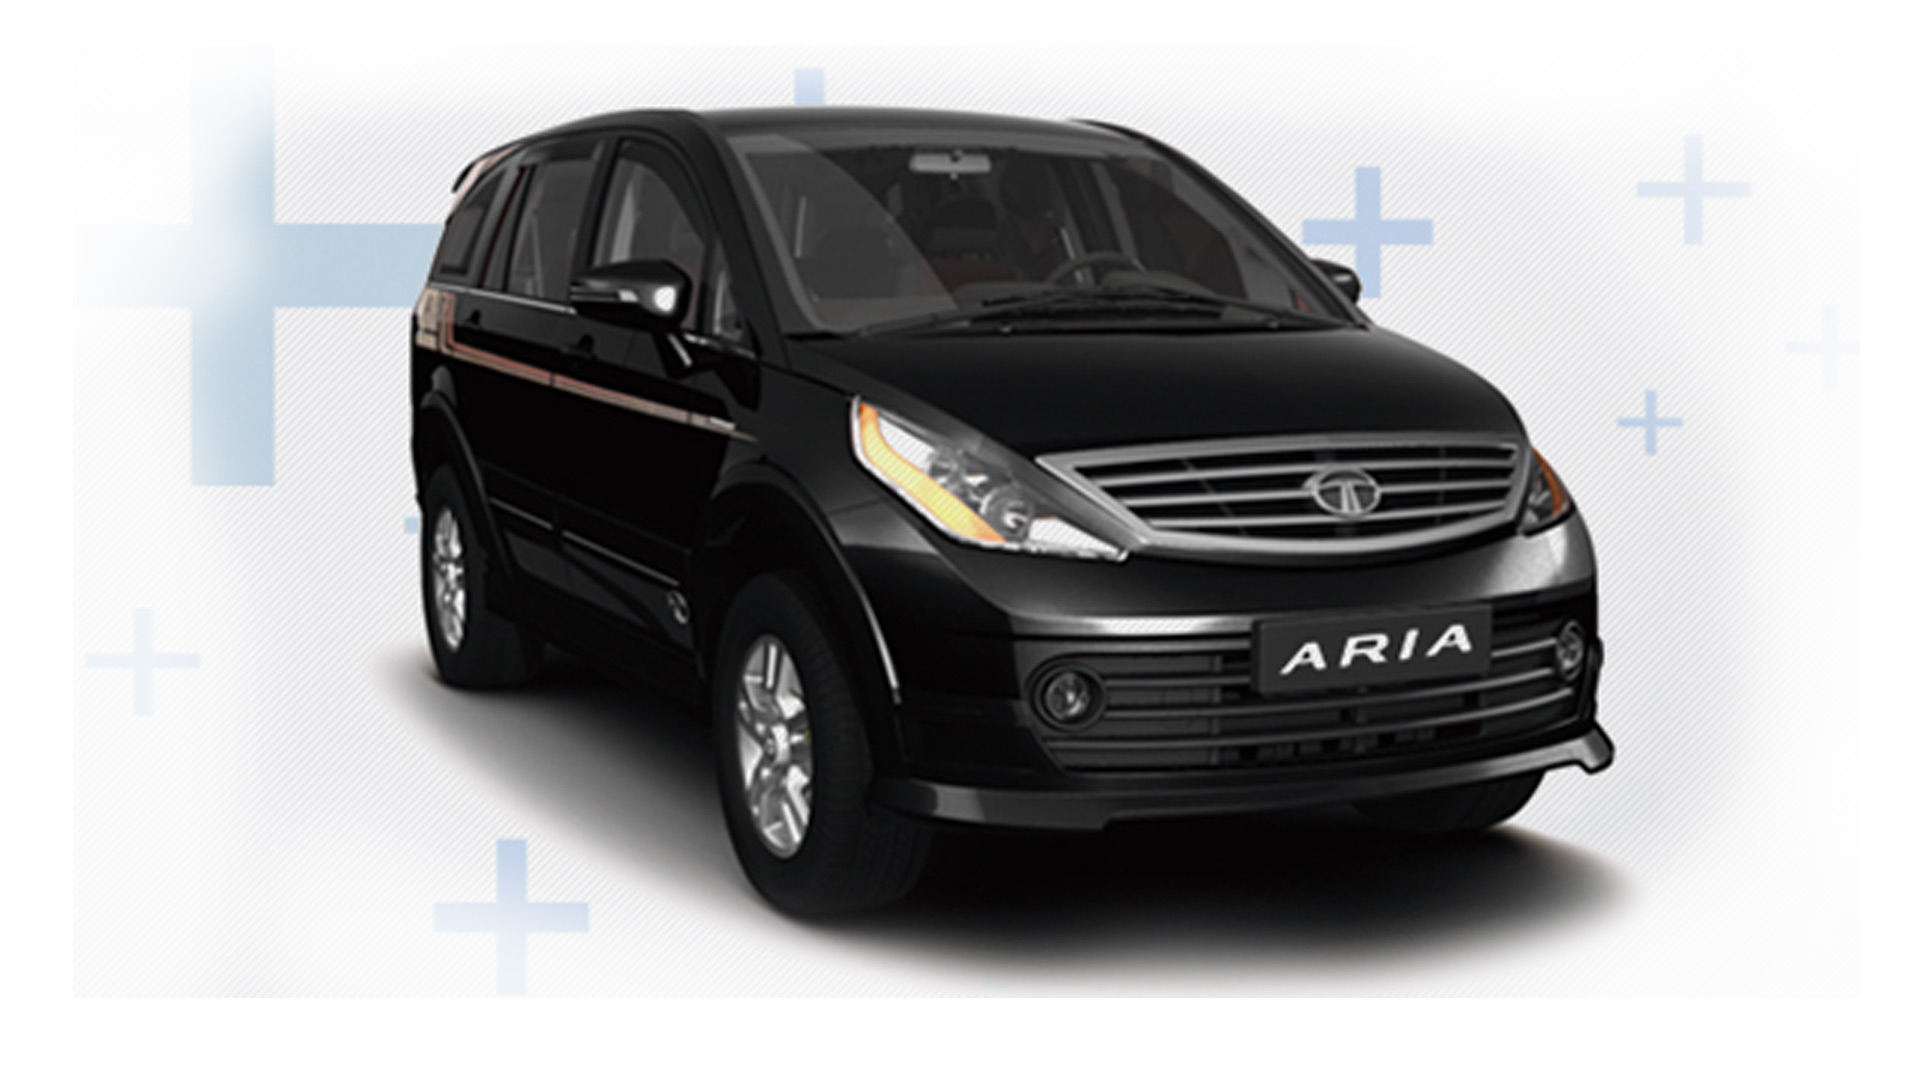 Tata Aria 2014 Pure LX Compare